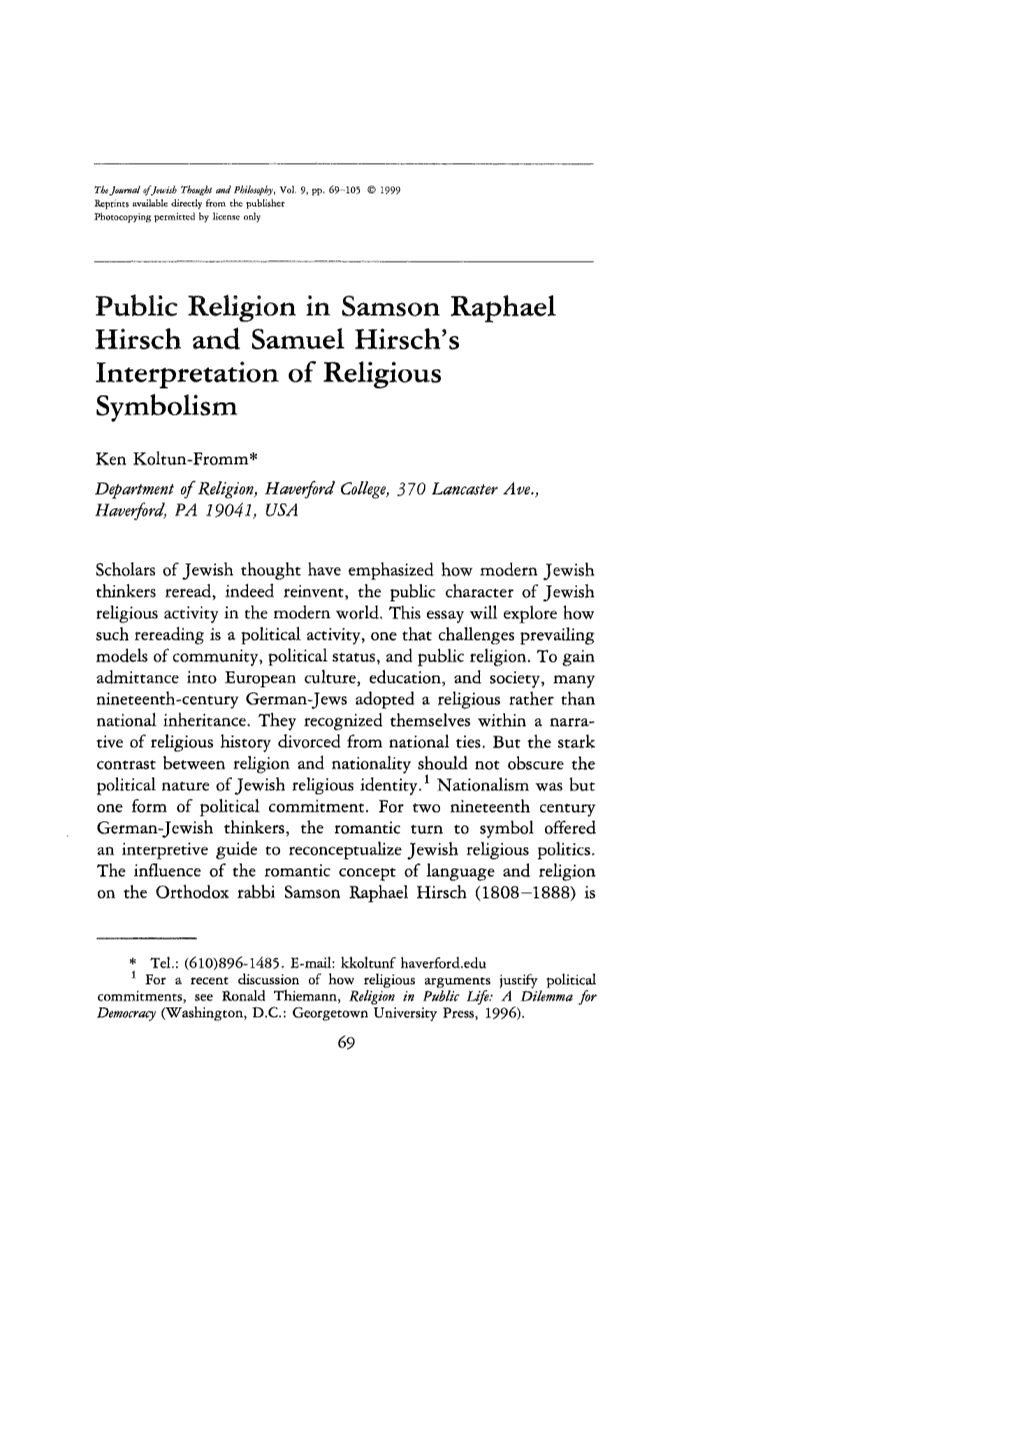 Public Religion in Samson Raphael Hirsch and Samuel Hirsch's Interpretation of Religious Symbolism